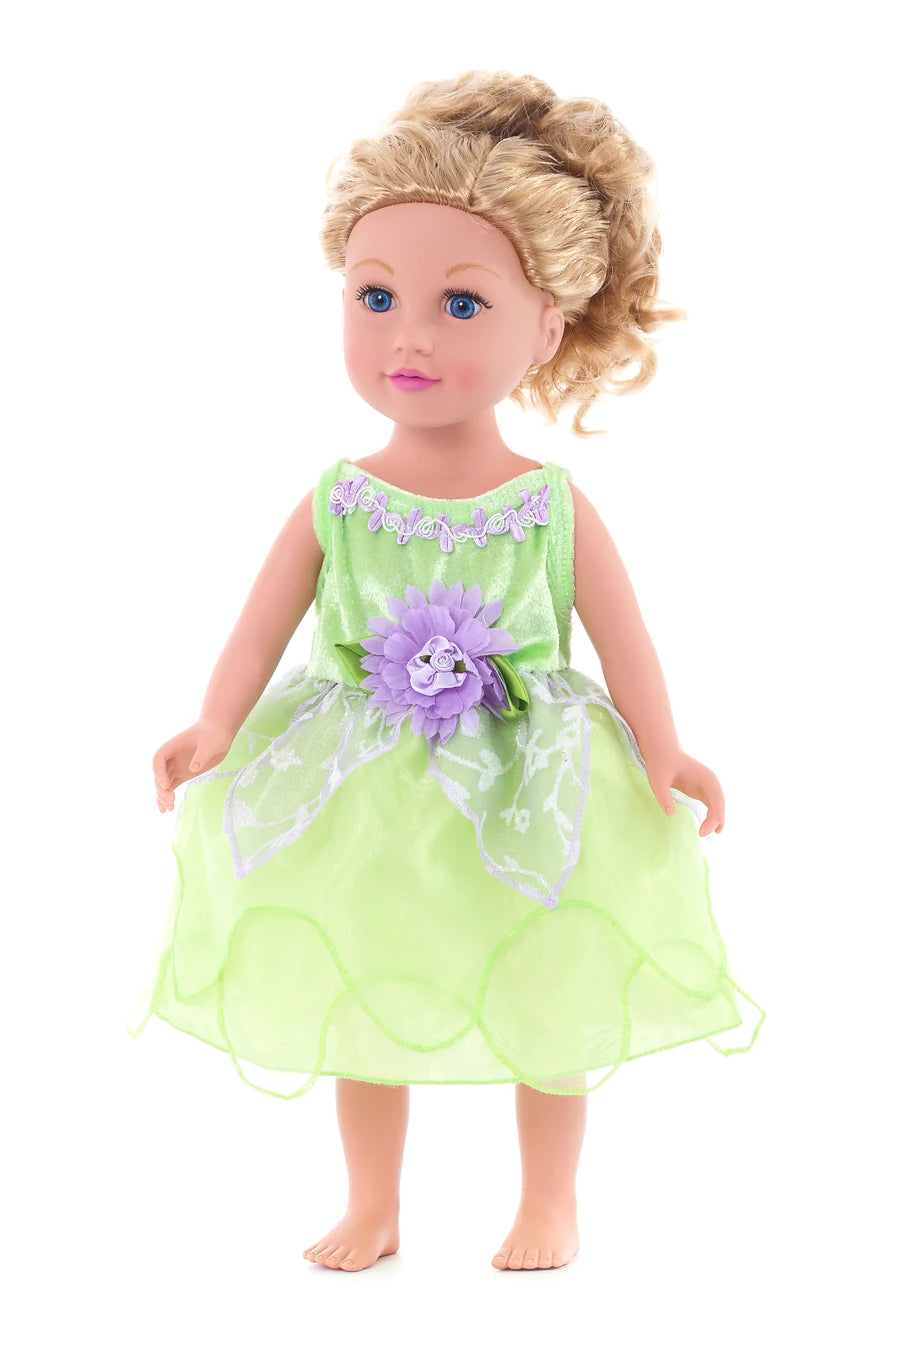 Tinkerbell Doll Dress